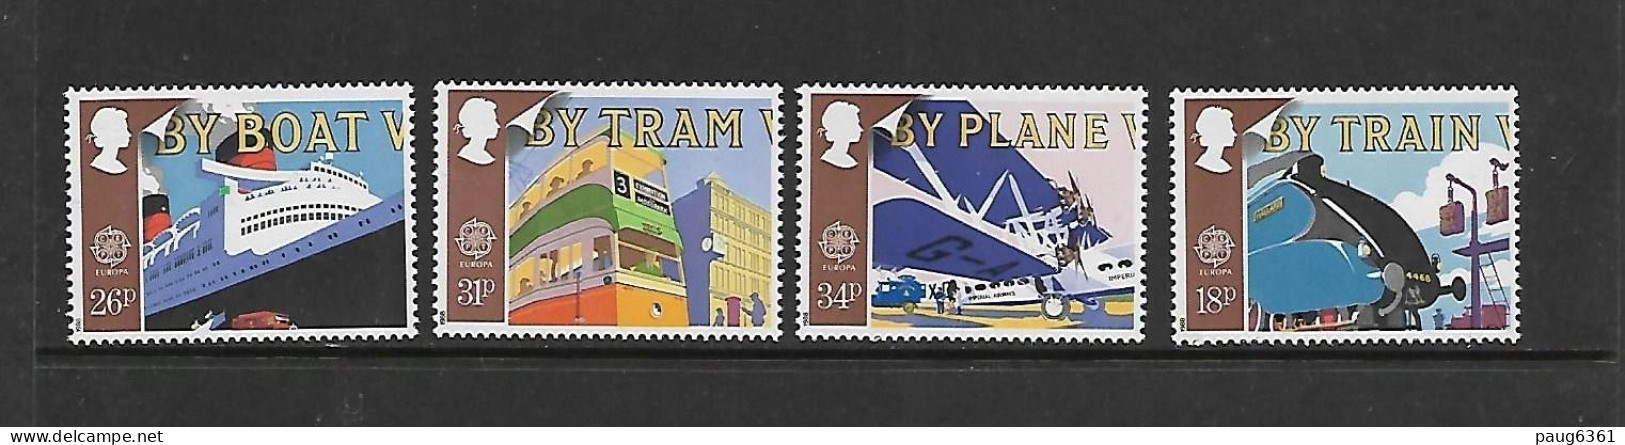 GRANDE-BRETAGNE 1988 TRAINS  YVERT N°1311/1314 NEUF MNH** - Trains